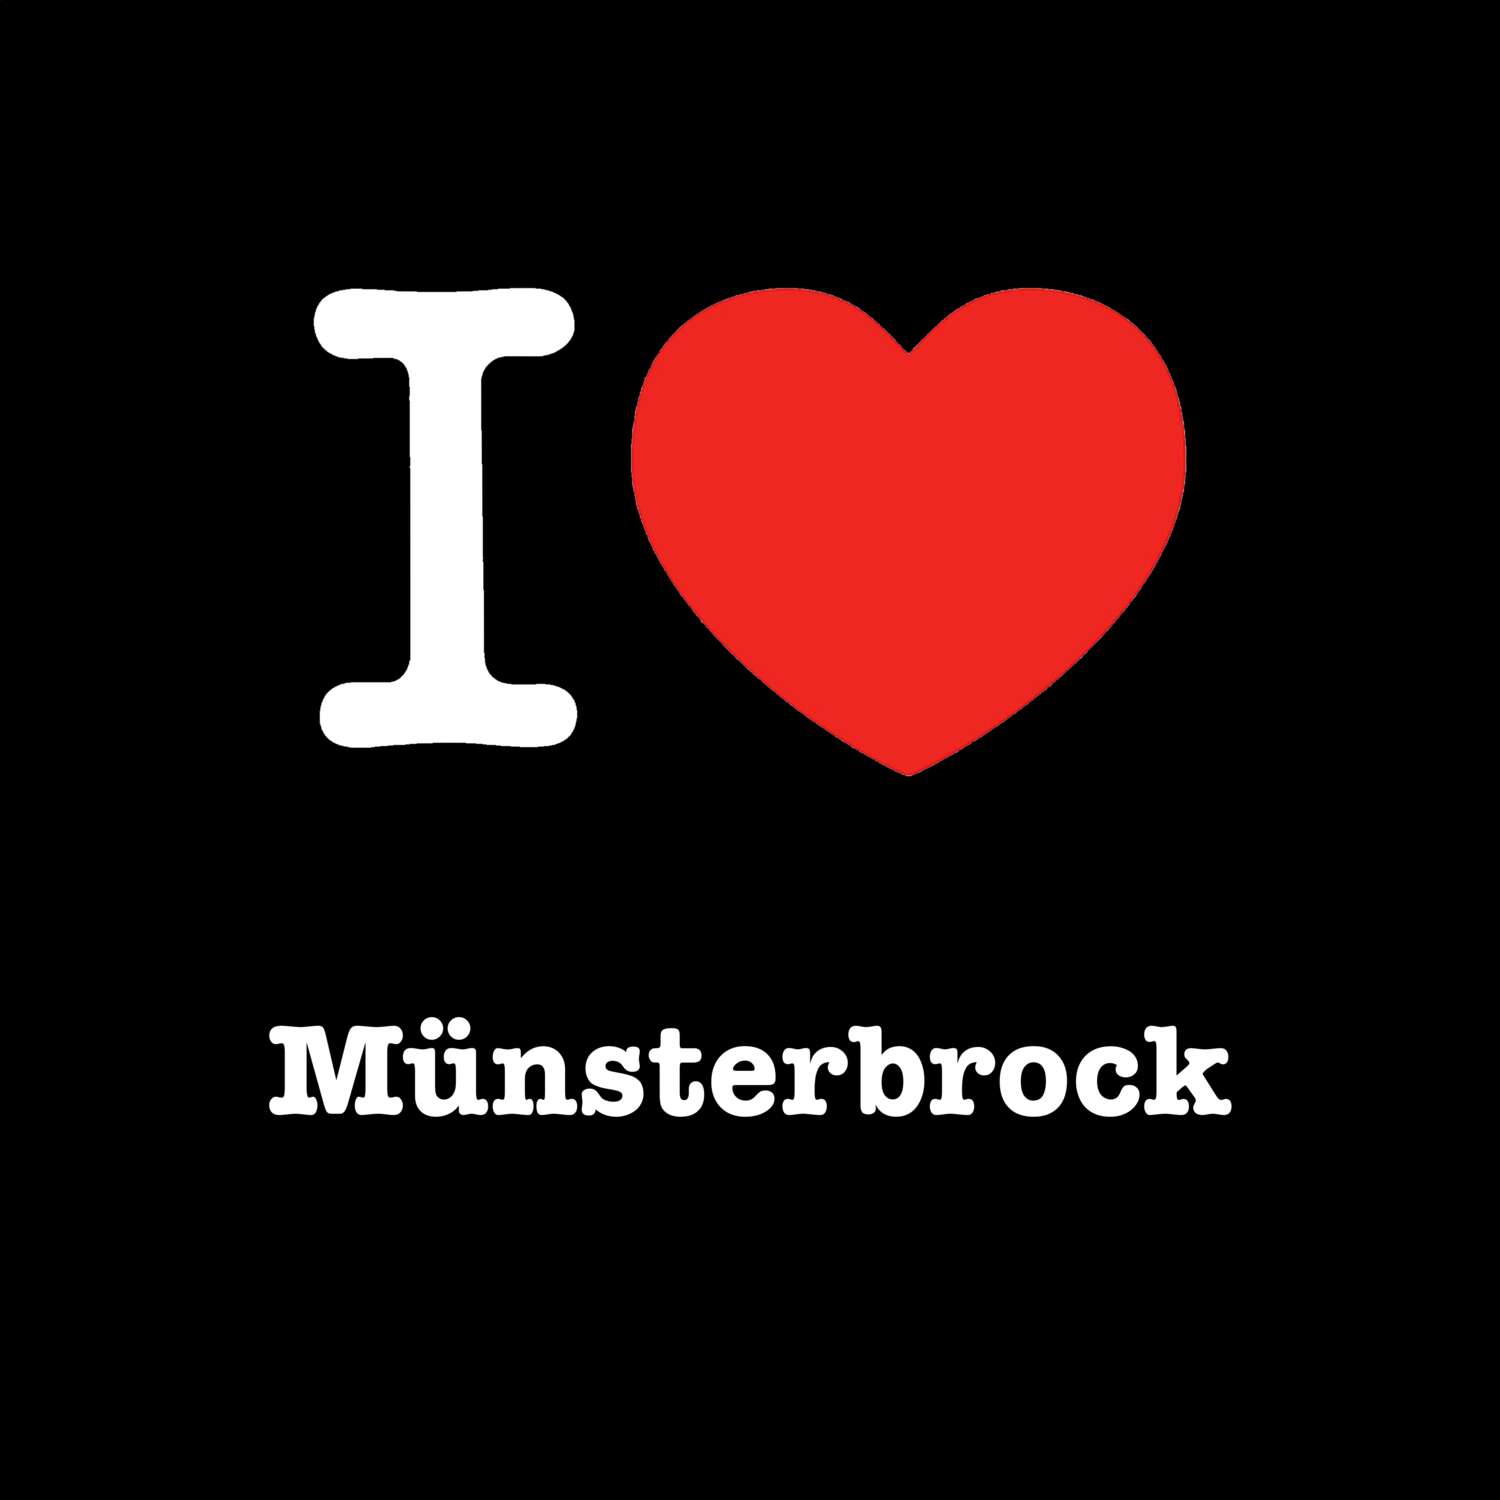 Münsterbrock T-Shirt »I love«